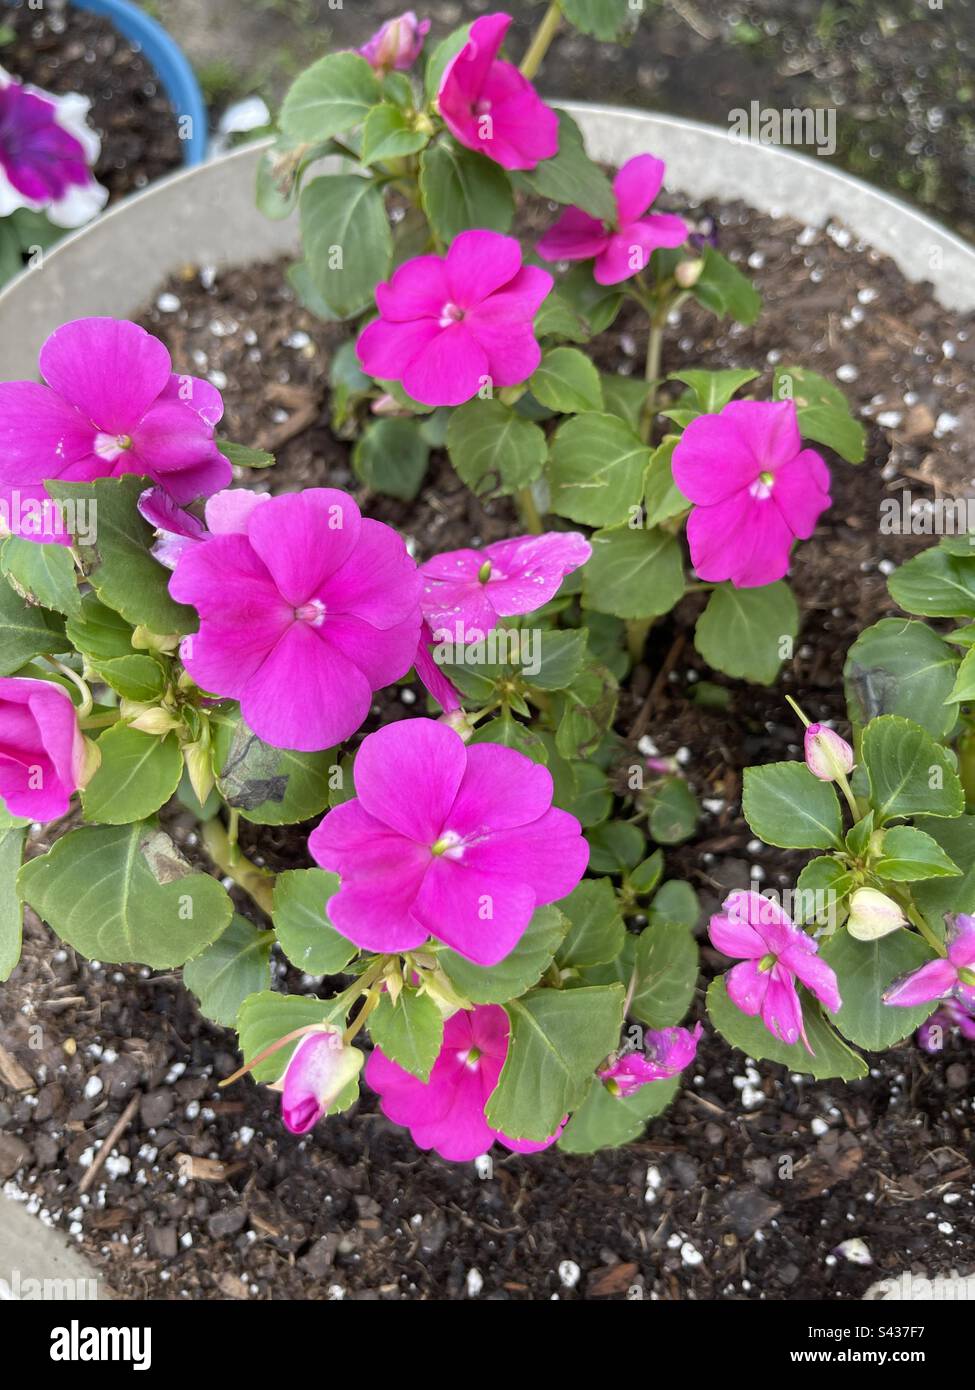 Flower pot full of pink impatiens. Stock Photo